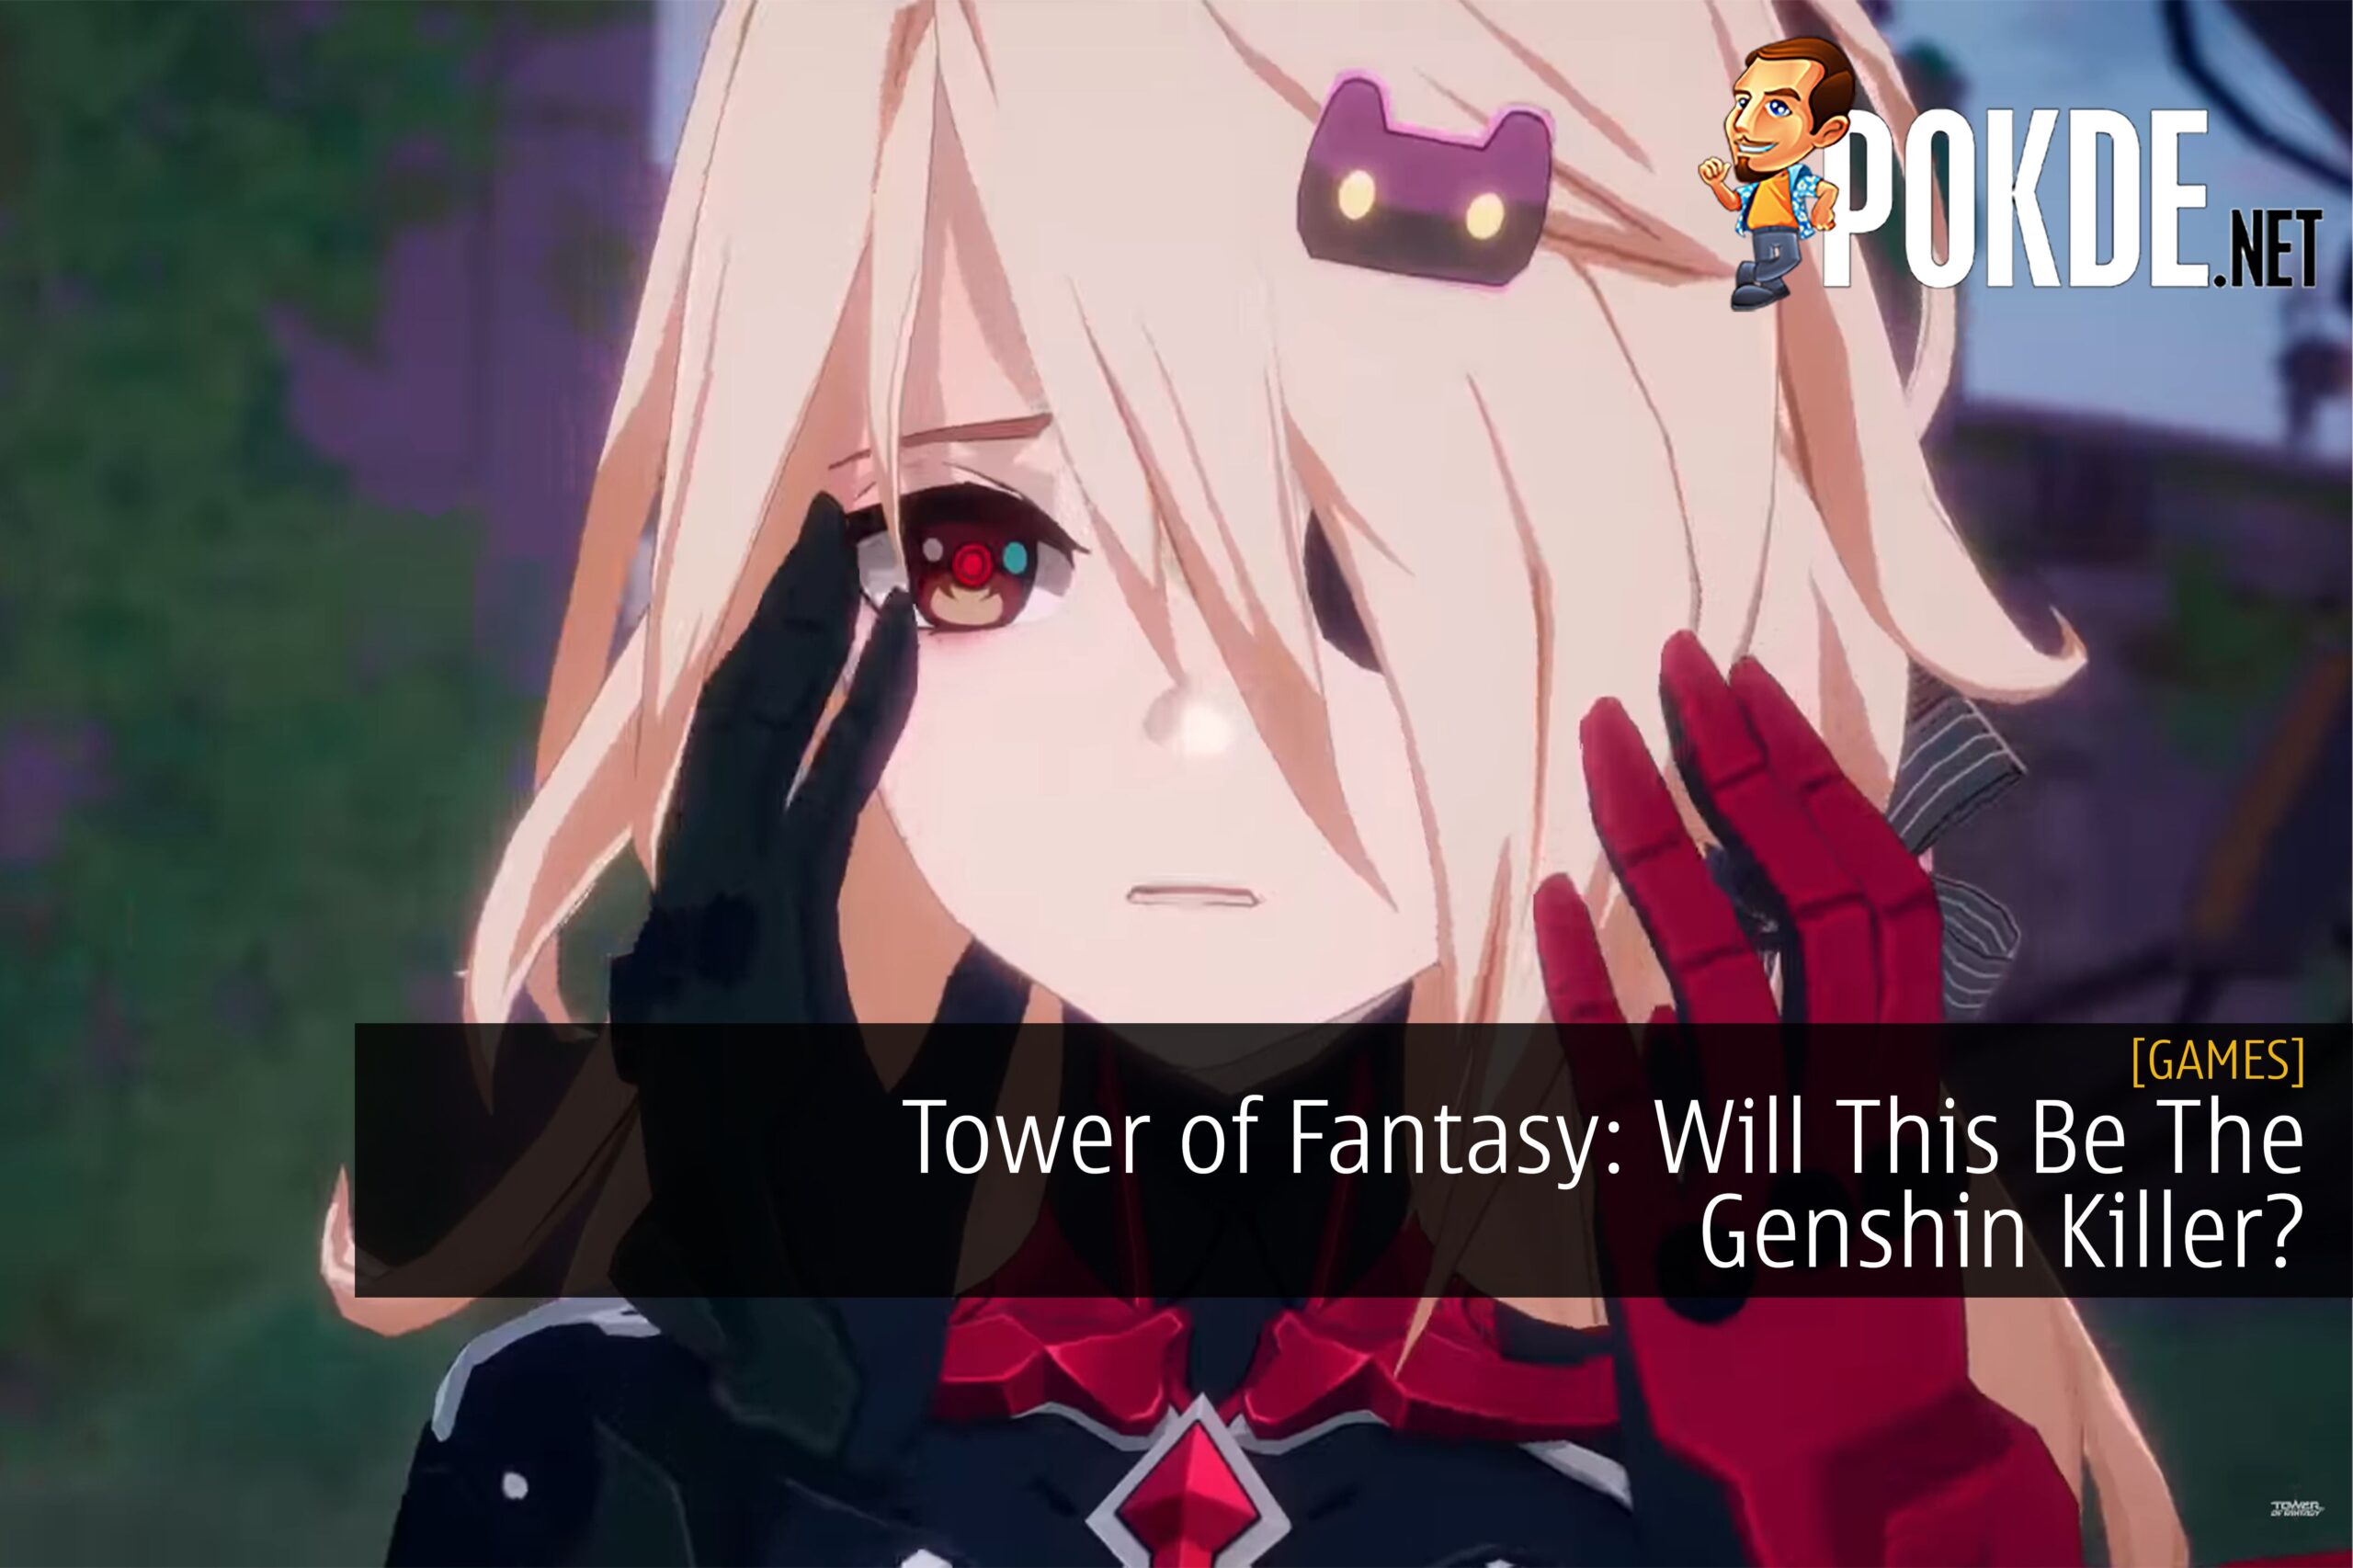 Spoiler-Free Review) Tower of Fantasy: A Genshin Clone or Genshin Killer?